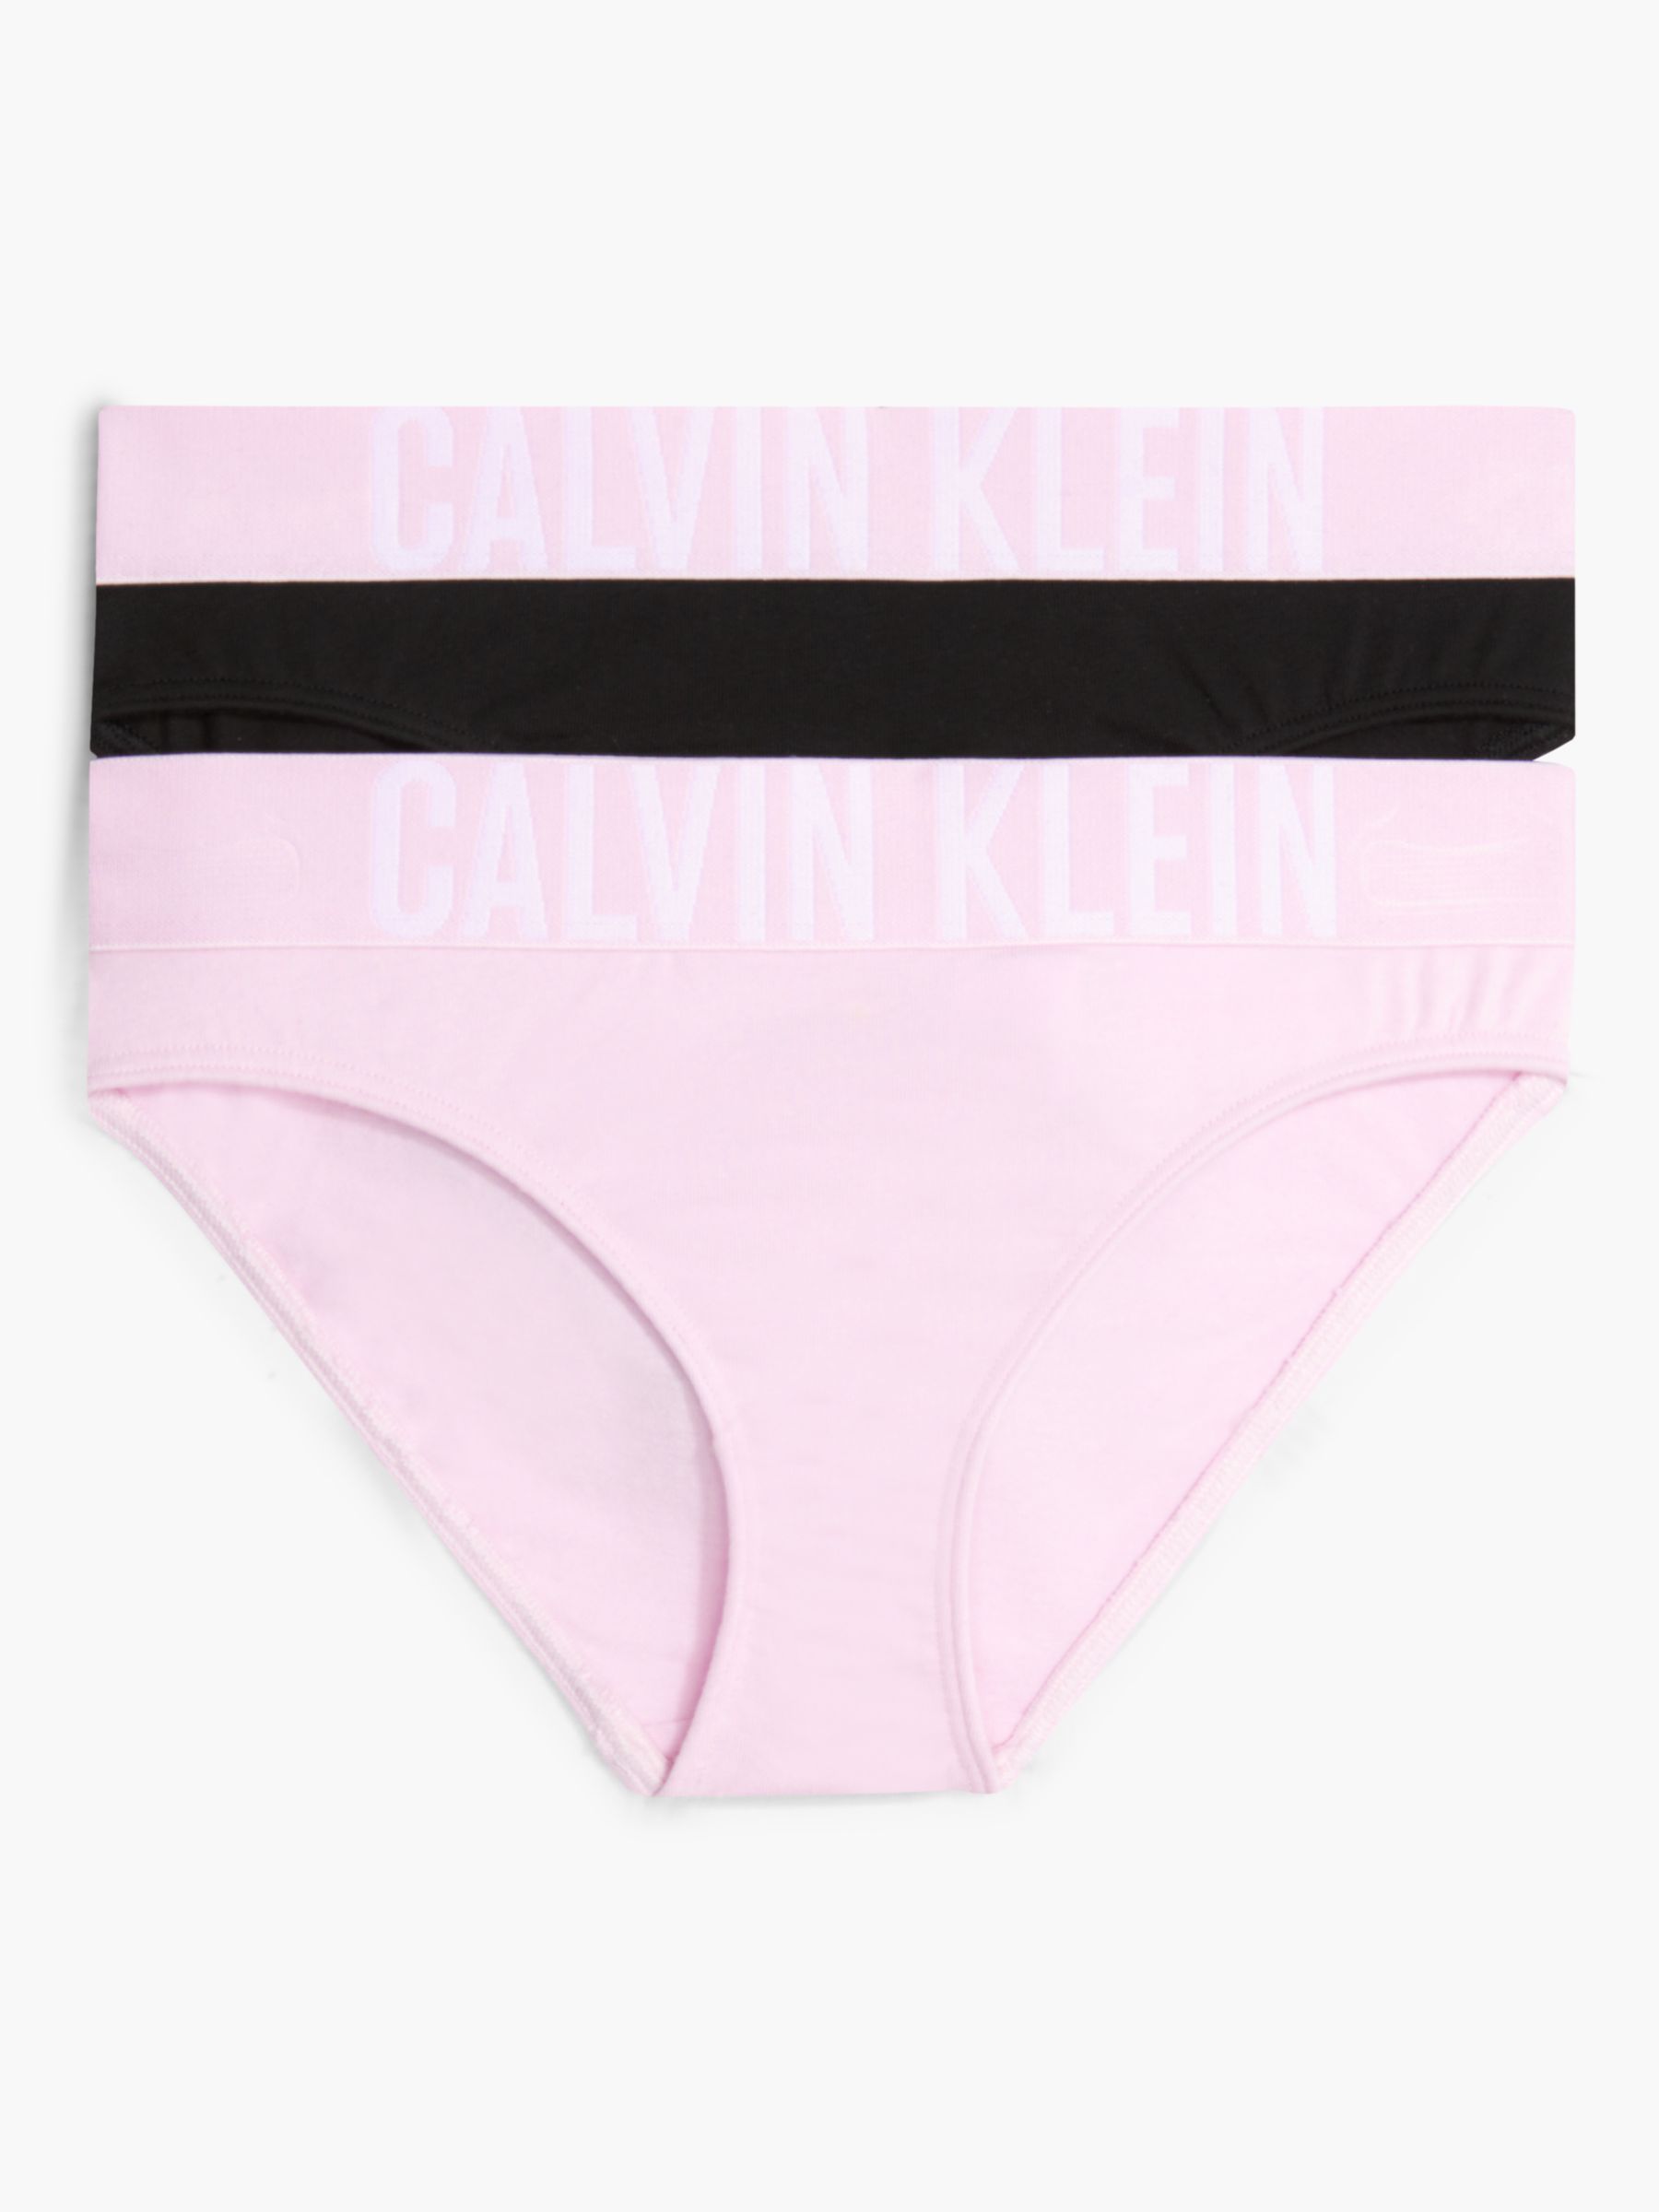 Calvin Klein Kids' Intense Power Bikini Brief, Pack of 2,  Frostedpink/Pvhblack, 8-10 years